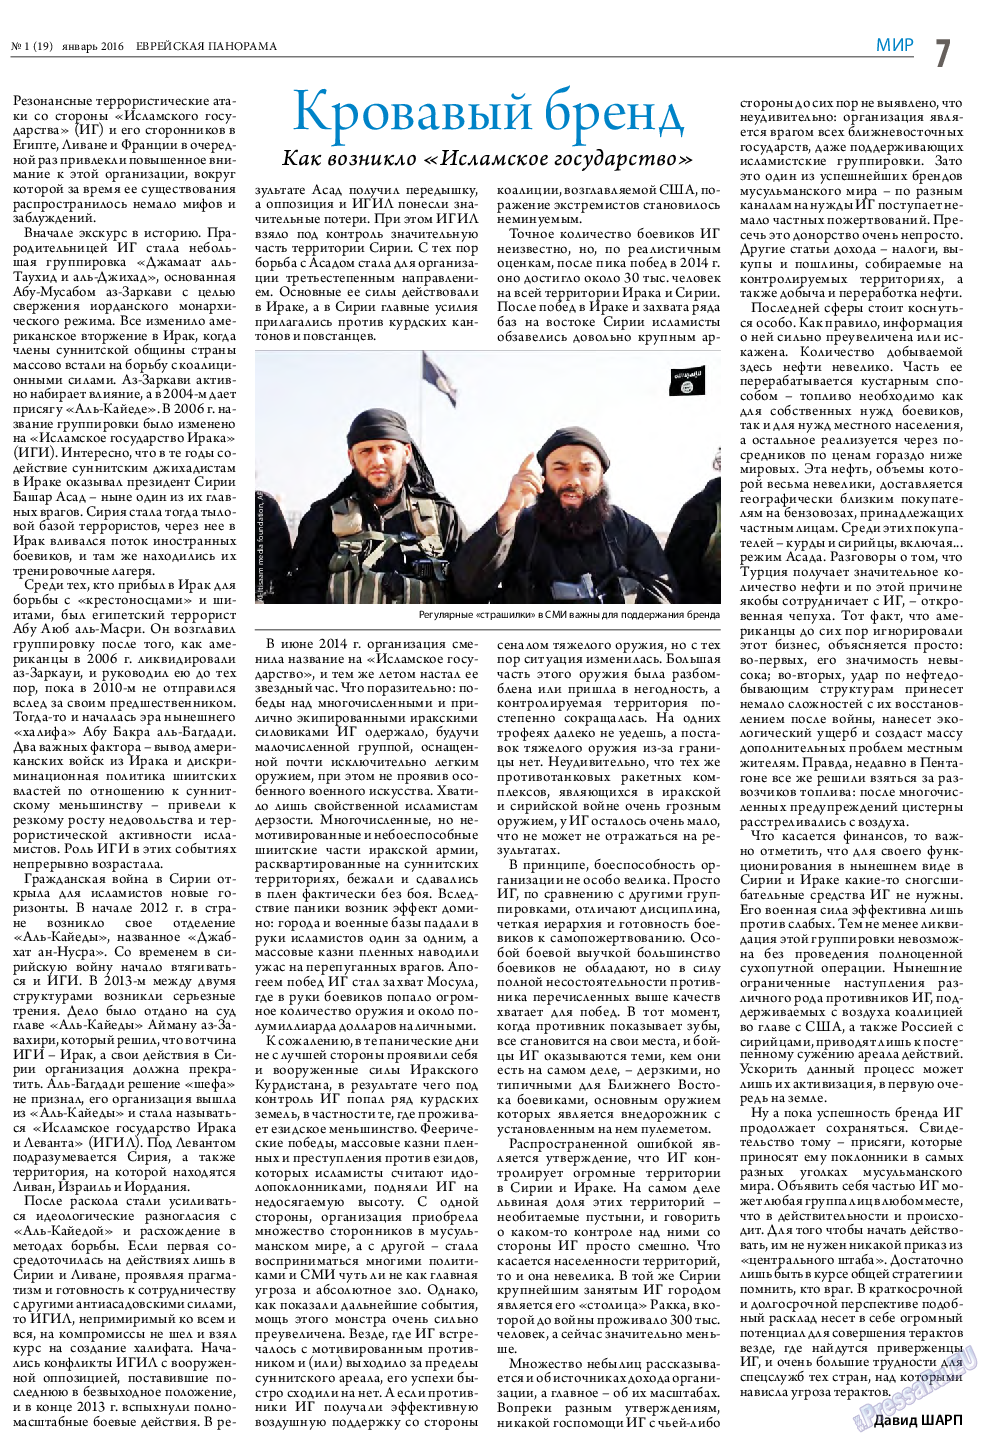 Еврейская панорама, газета. 2016 №1 стр.7